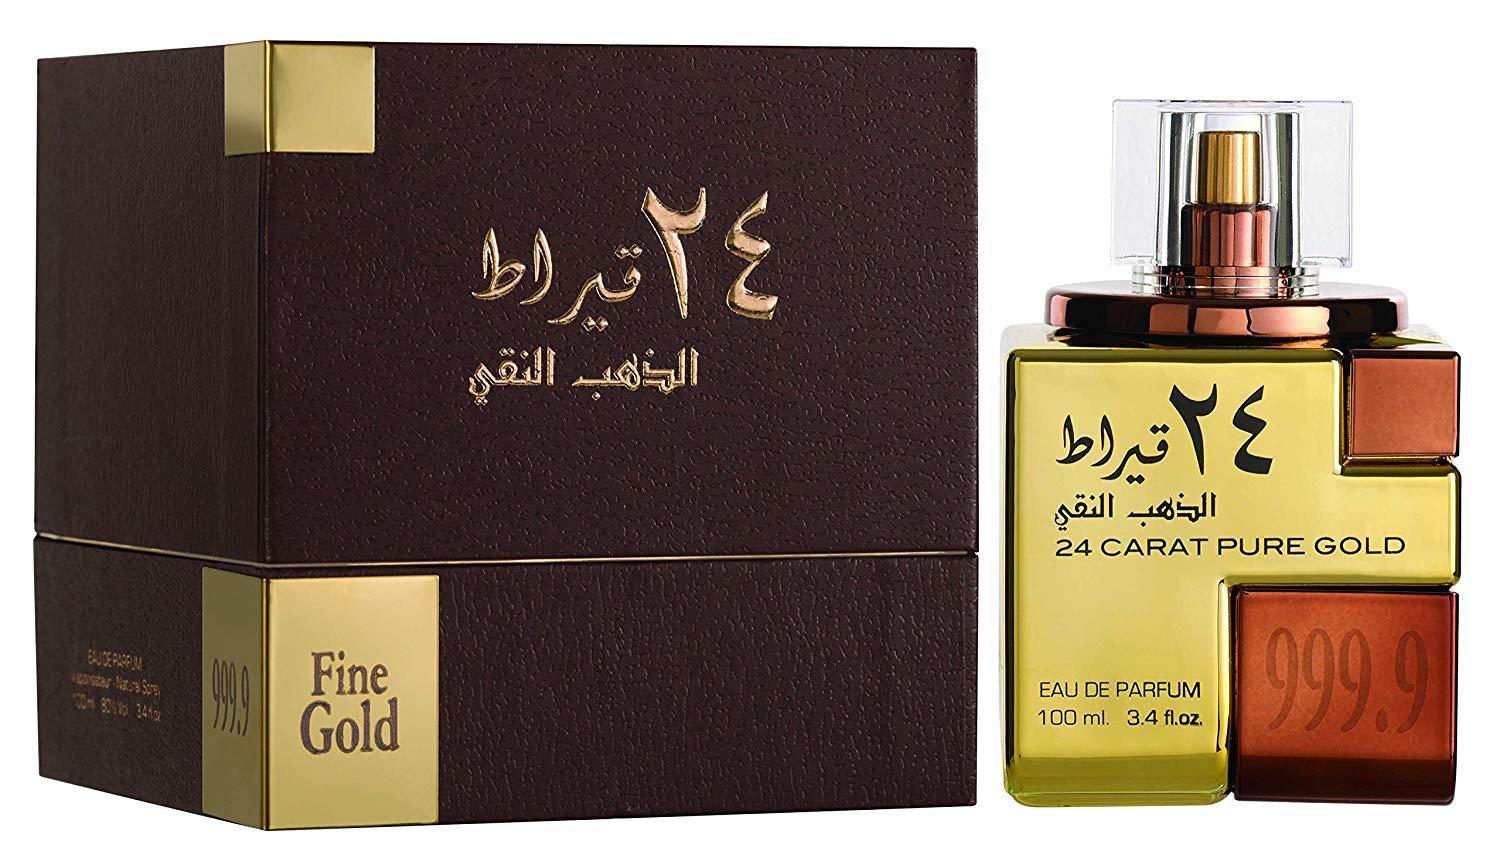 24 Carat Pure Gold EDP (100ml) spray perfume by Lattafa- Khan El Khalili